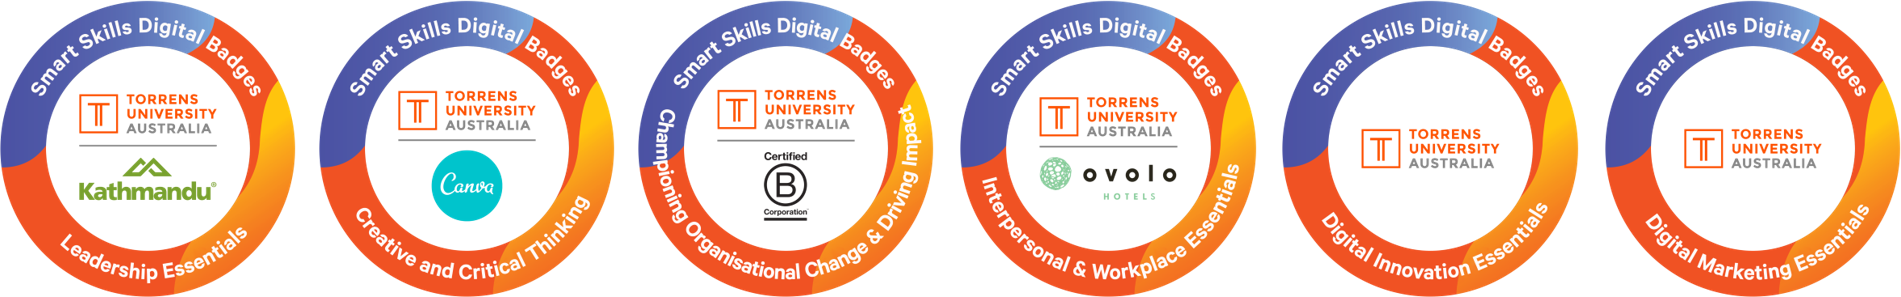 smart skills digital badges footer